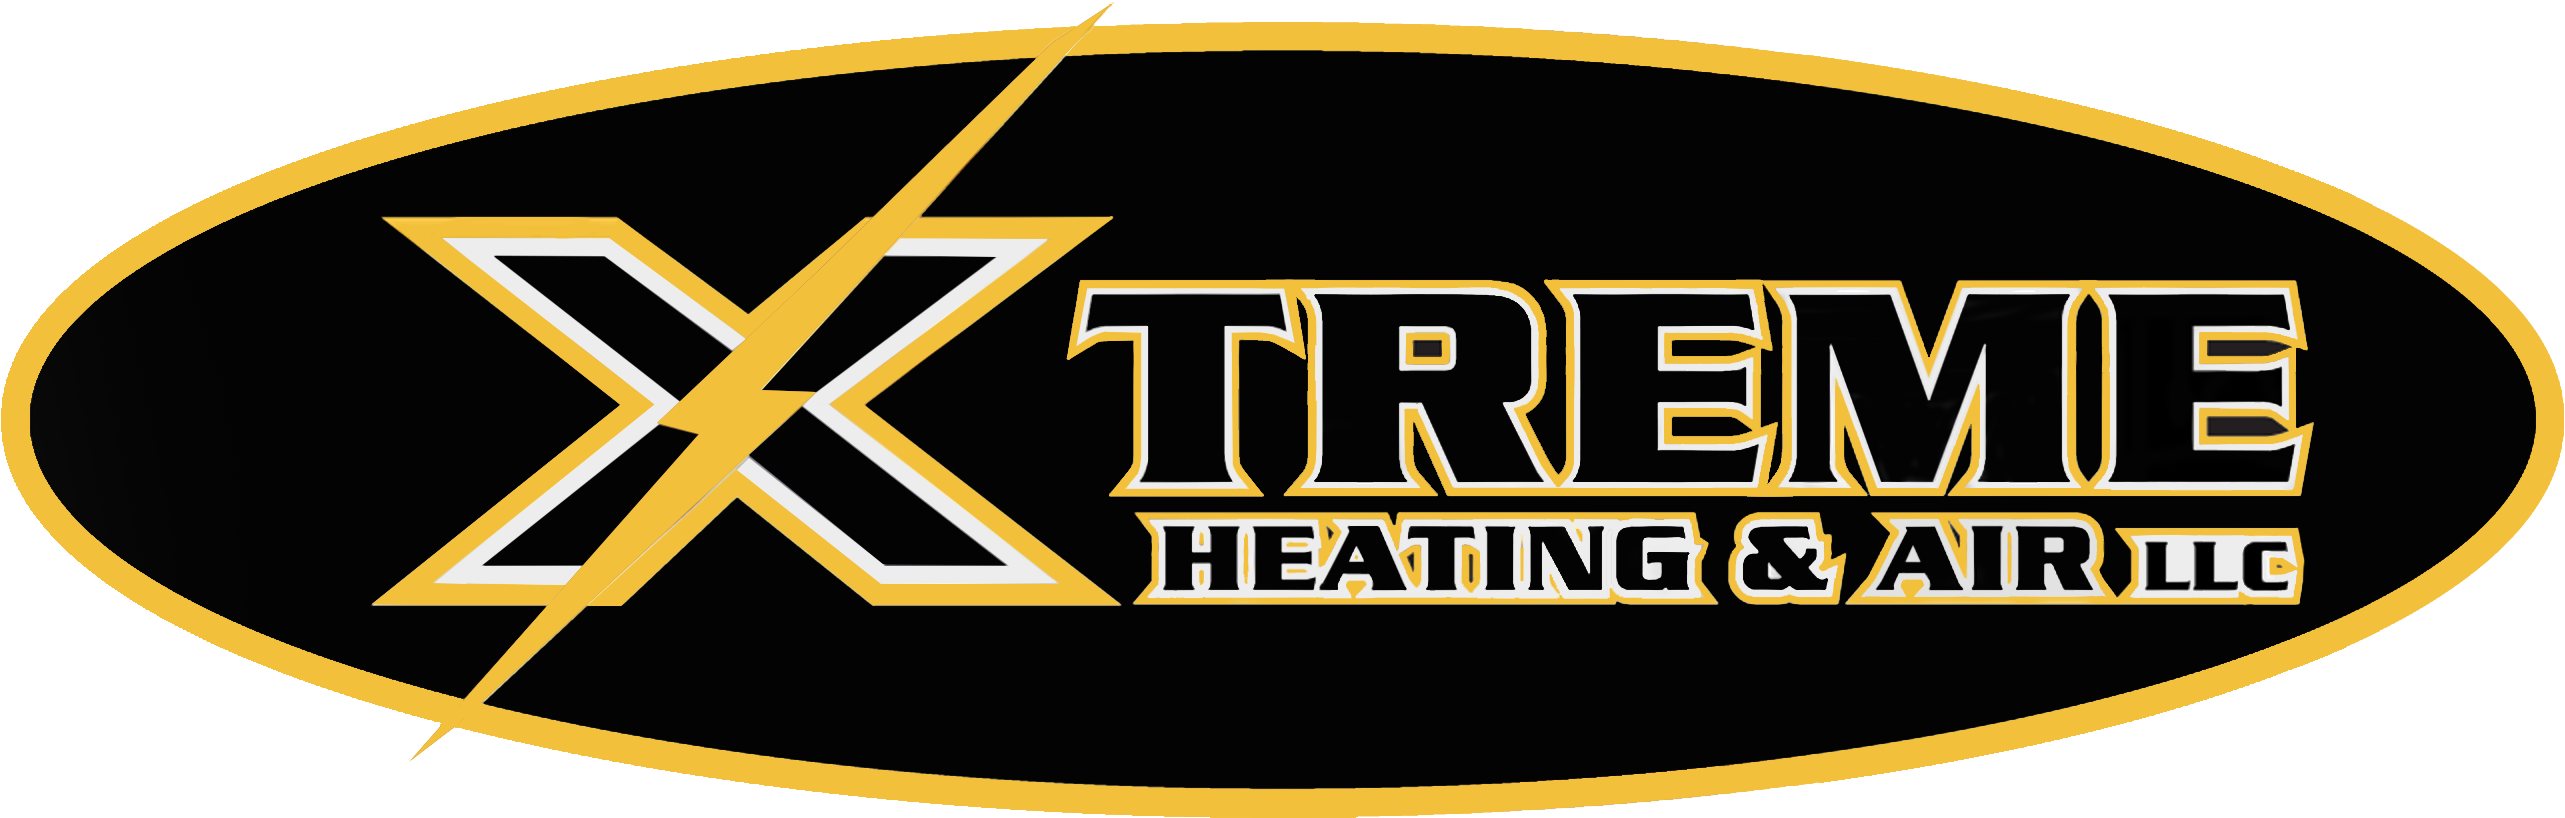 Xtreme Heating & Air Inc - Lapel Pin (2845x1917), Png Download